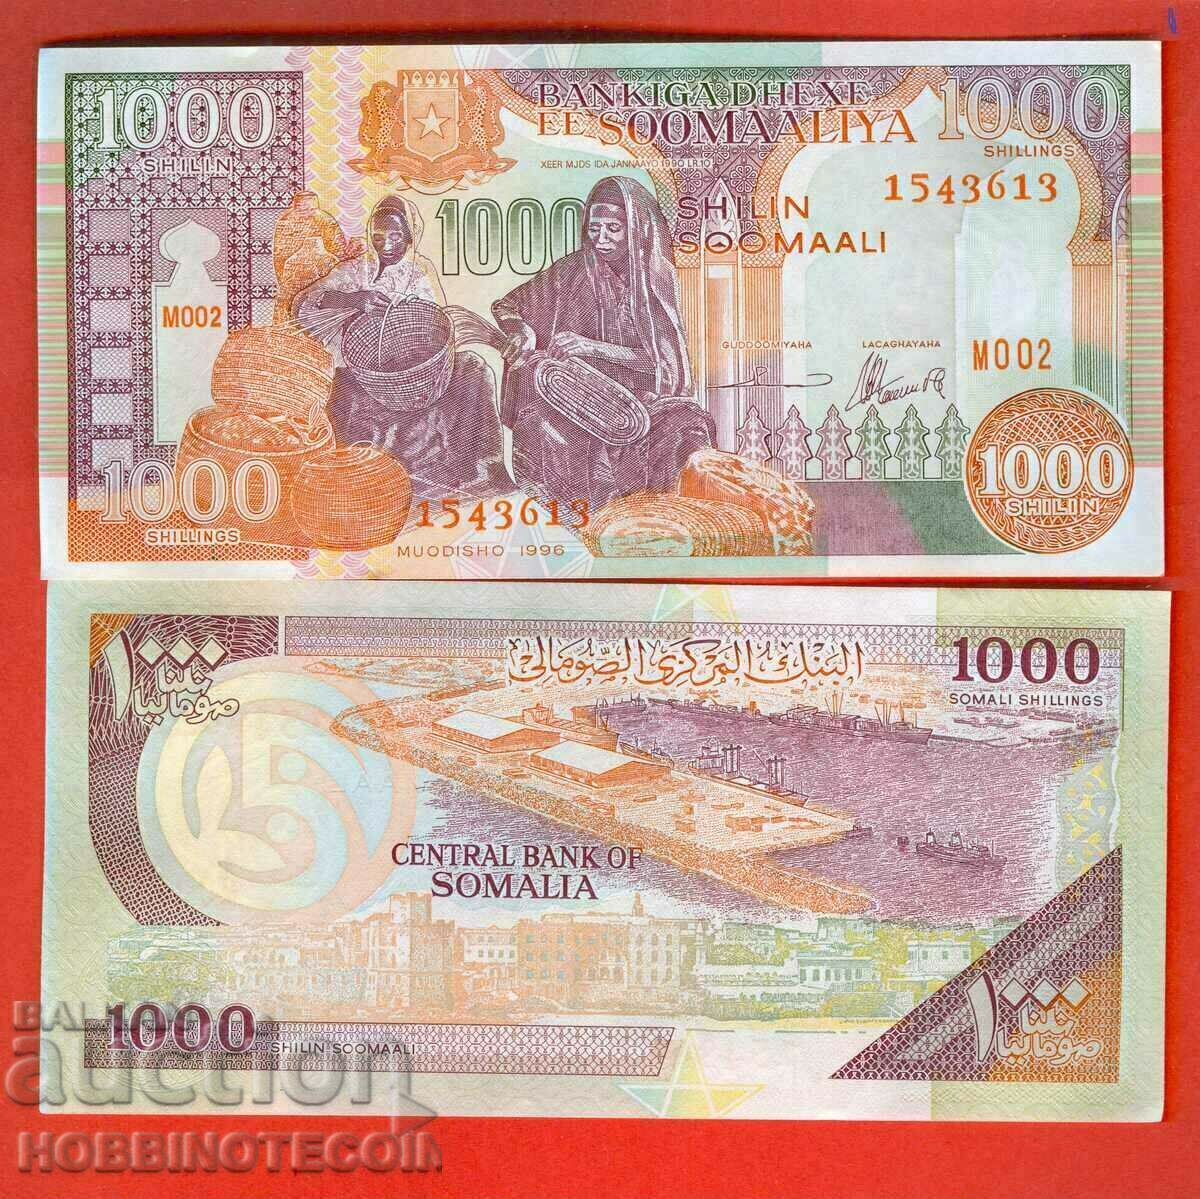 SOMALIA SOMALIA 1000 1000 σελίνια 7ψήφια έκδοση 1996 NEW UNC